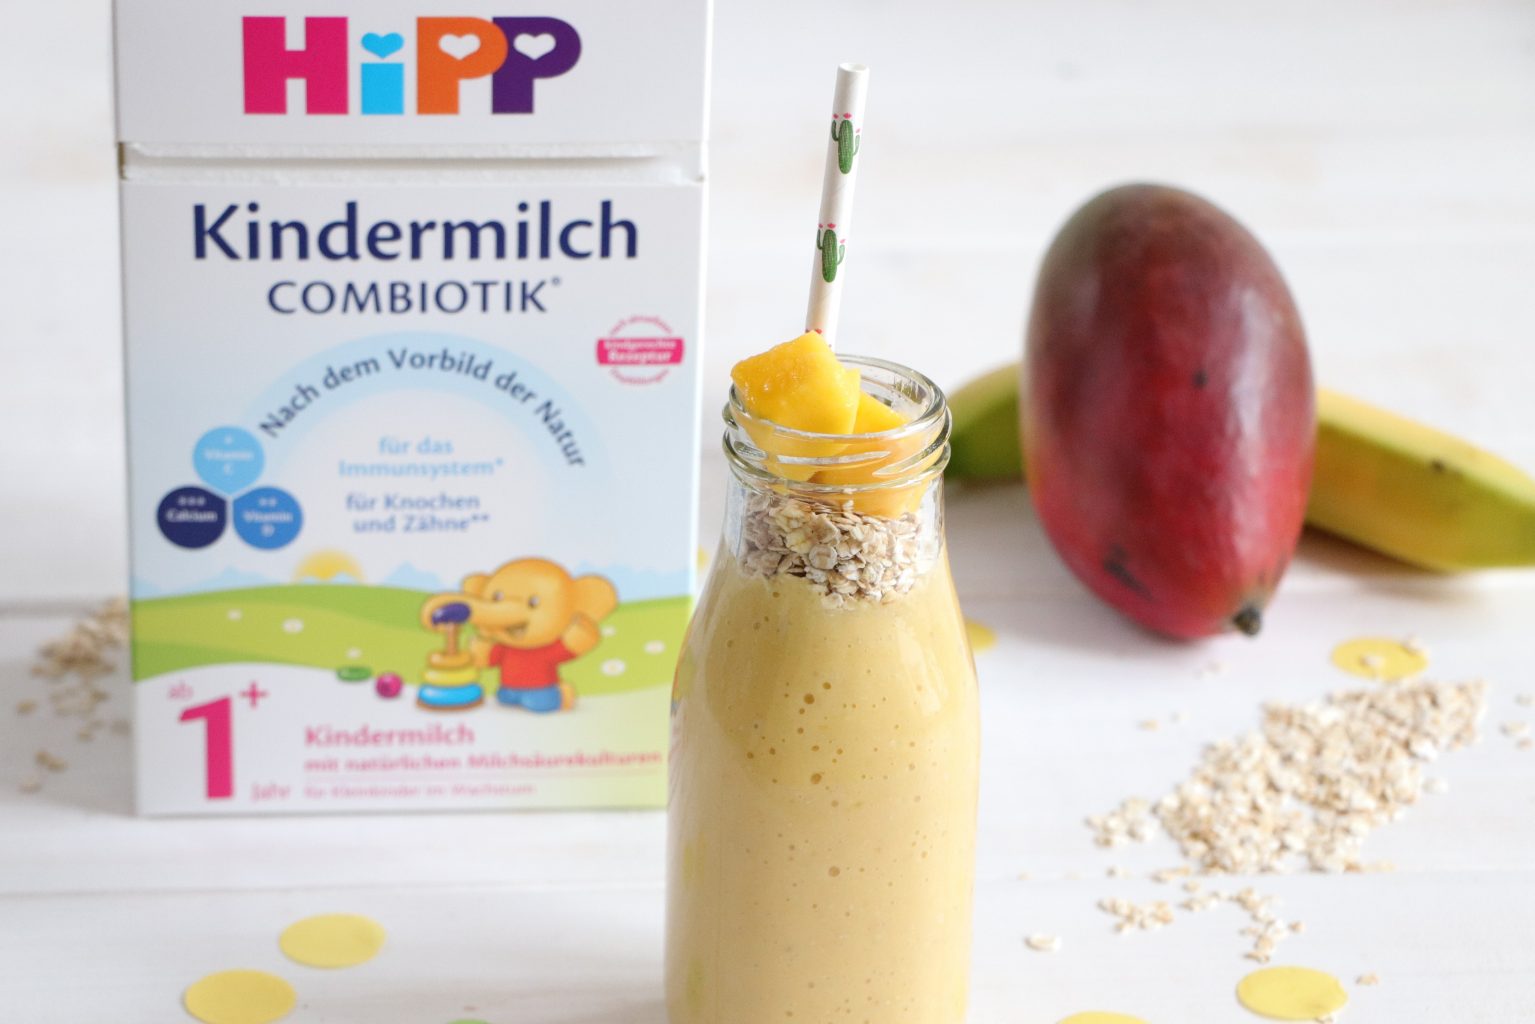 HiPP Kindermilch Combiotik Erfahrungen